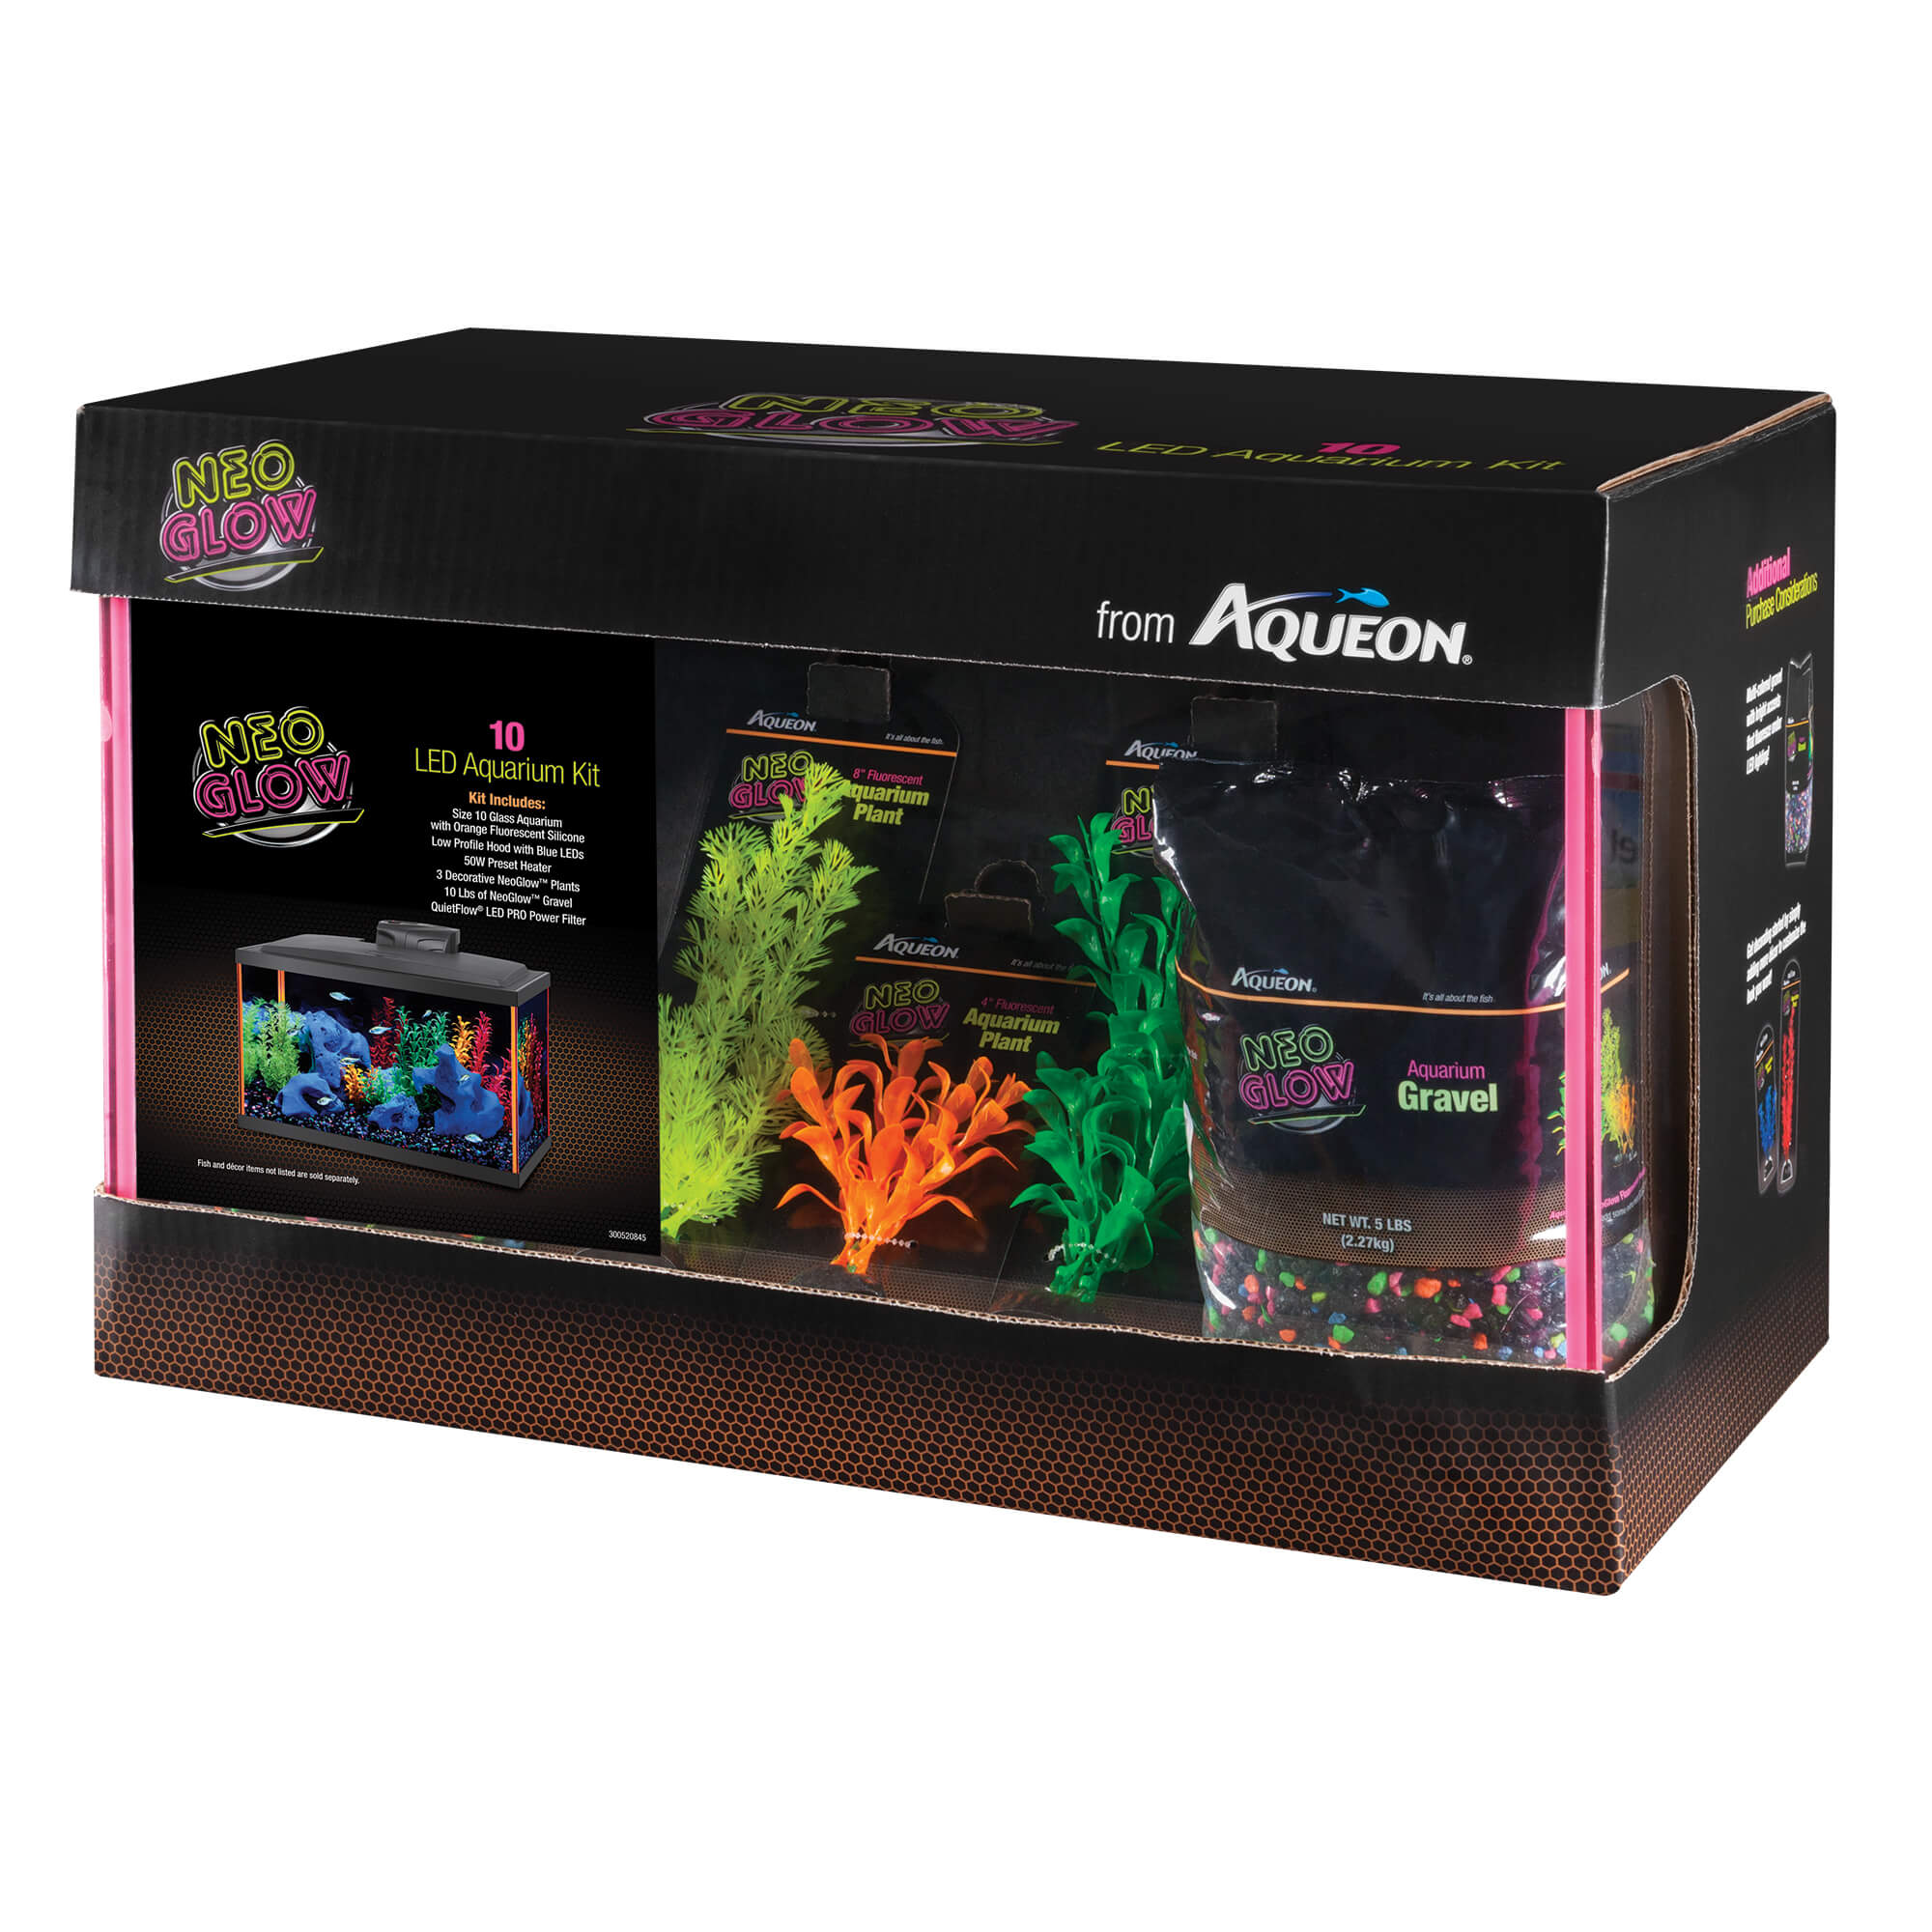 Aqueon NeoGlow LED Aquarium Kit 10 Gallon